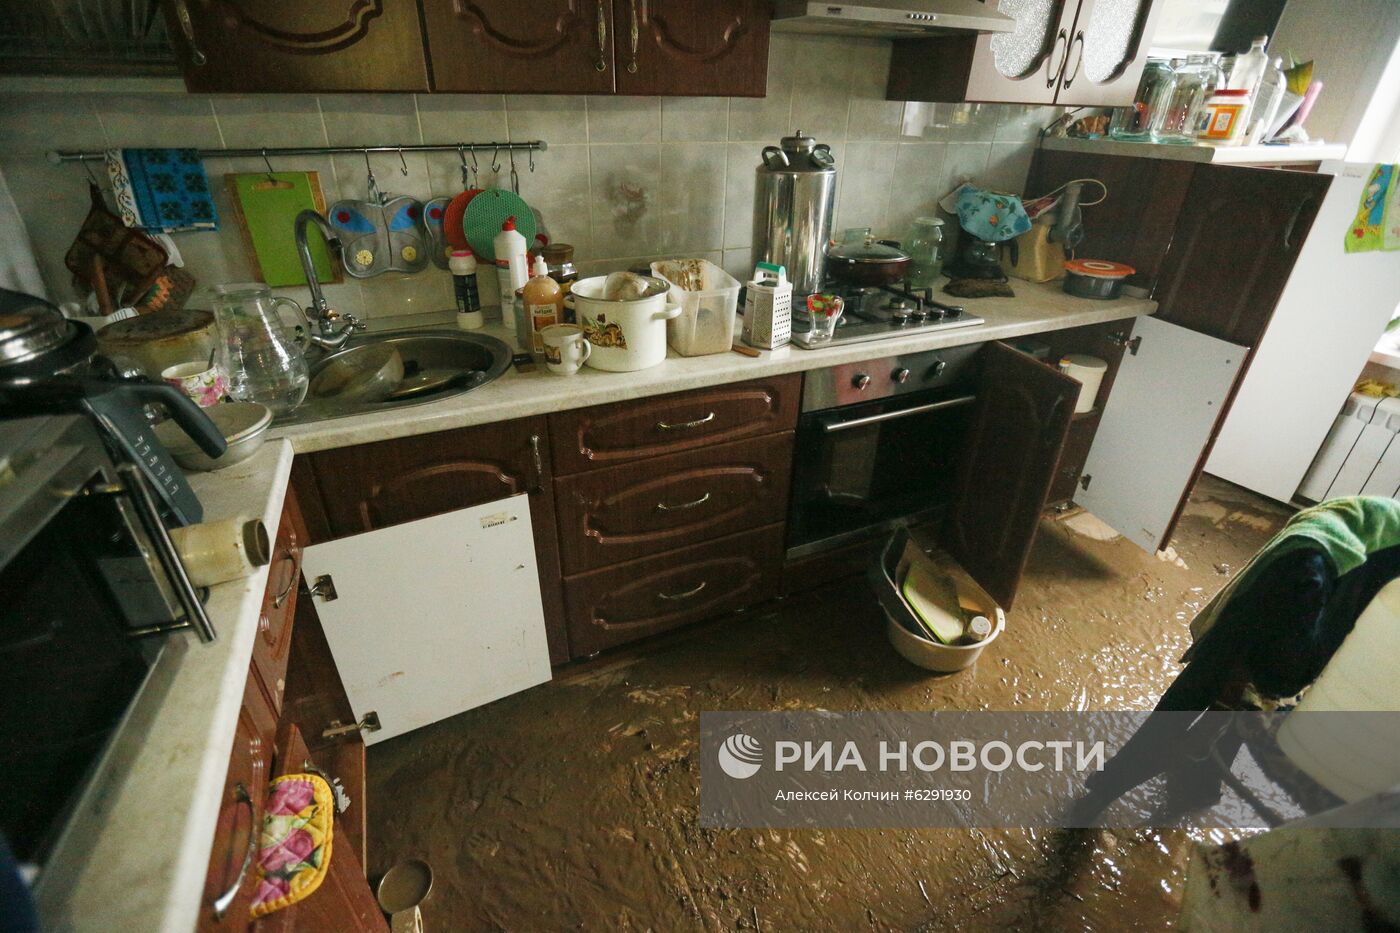 В городе Нижние Серги в Свердловской области ввели режим ЧС из-за паводка